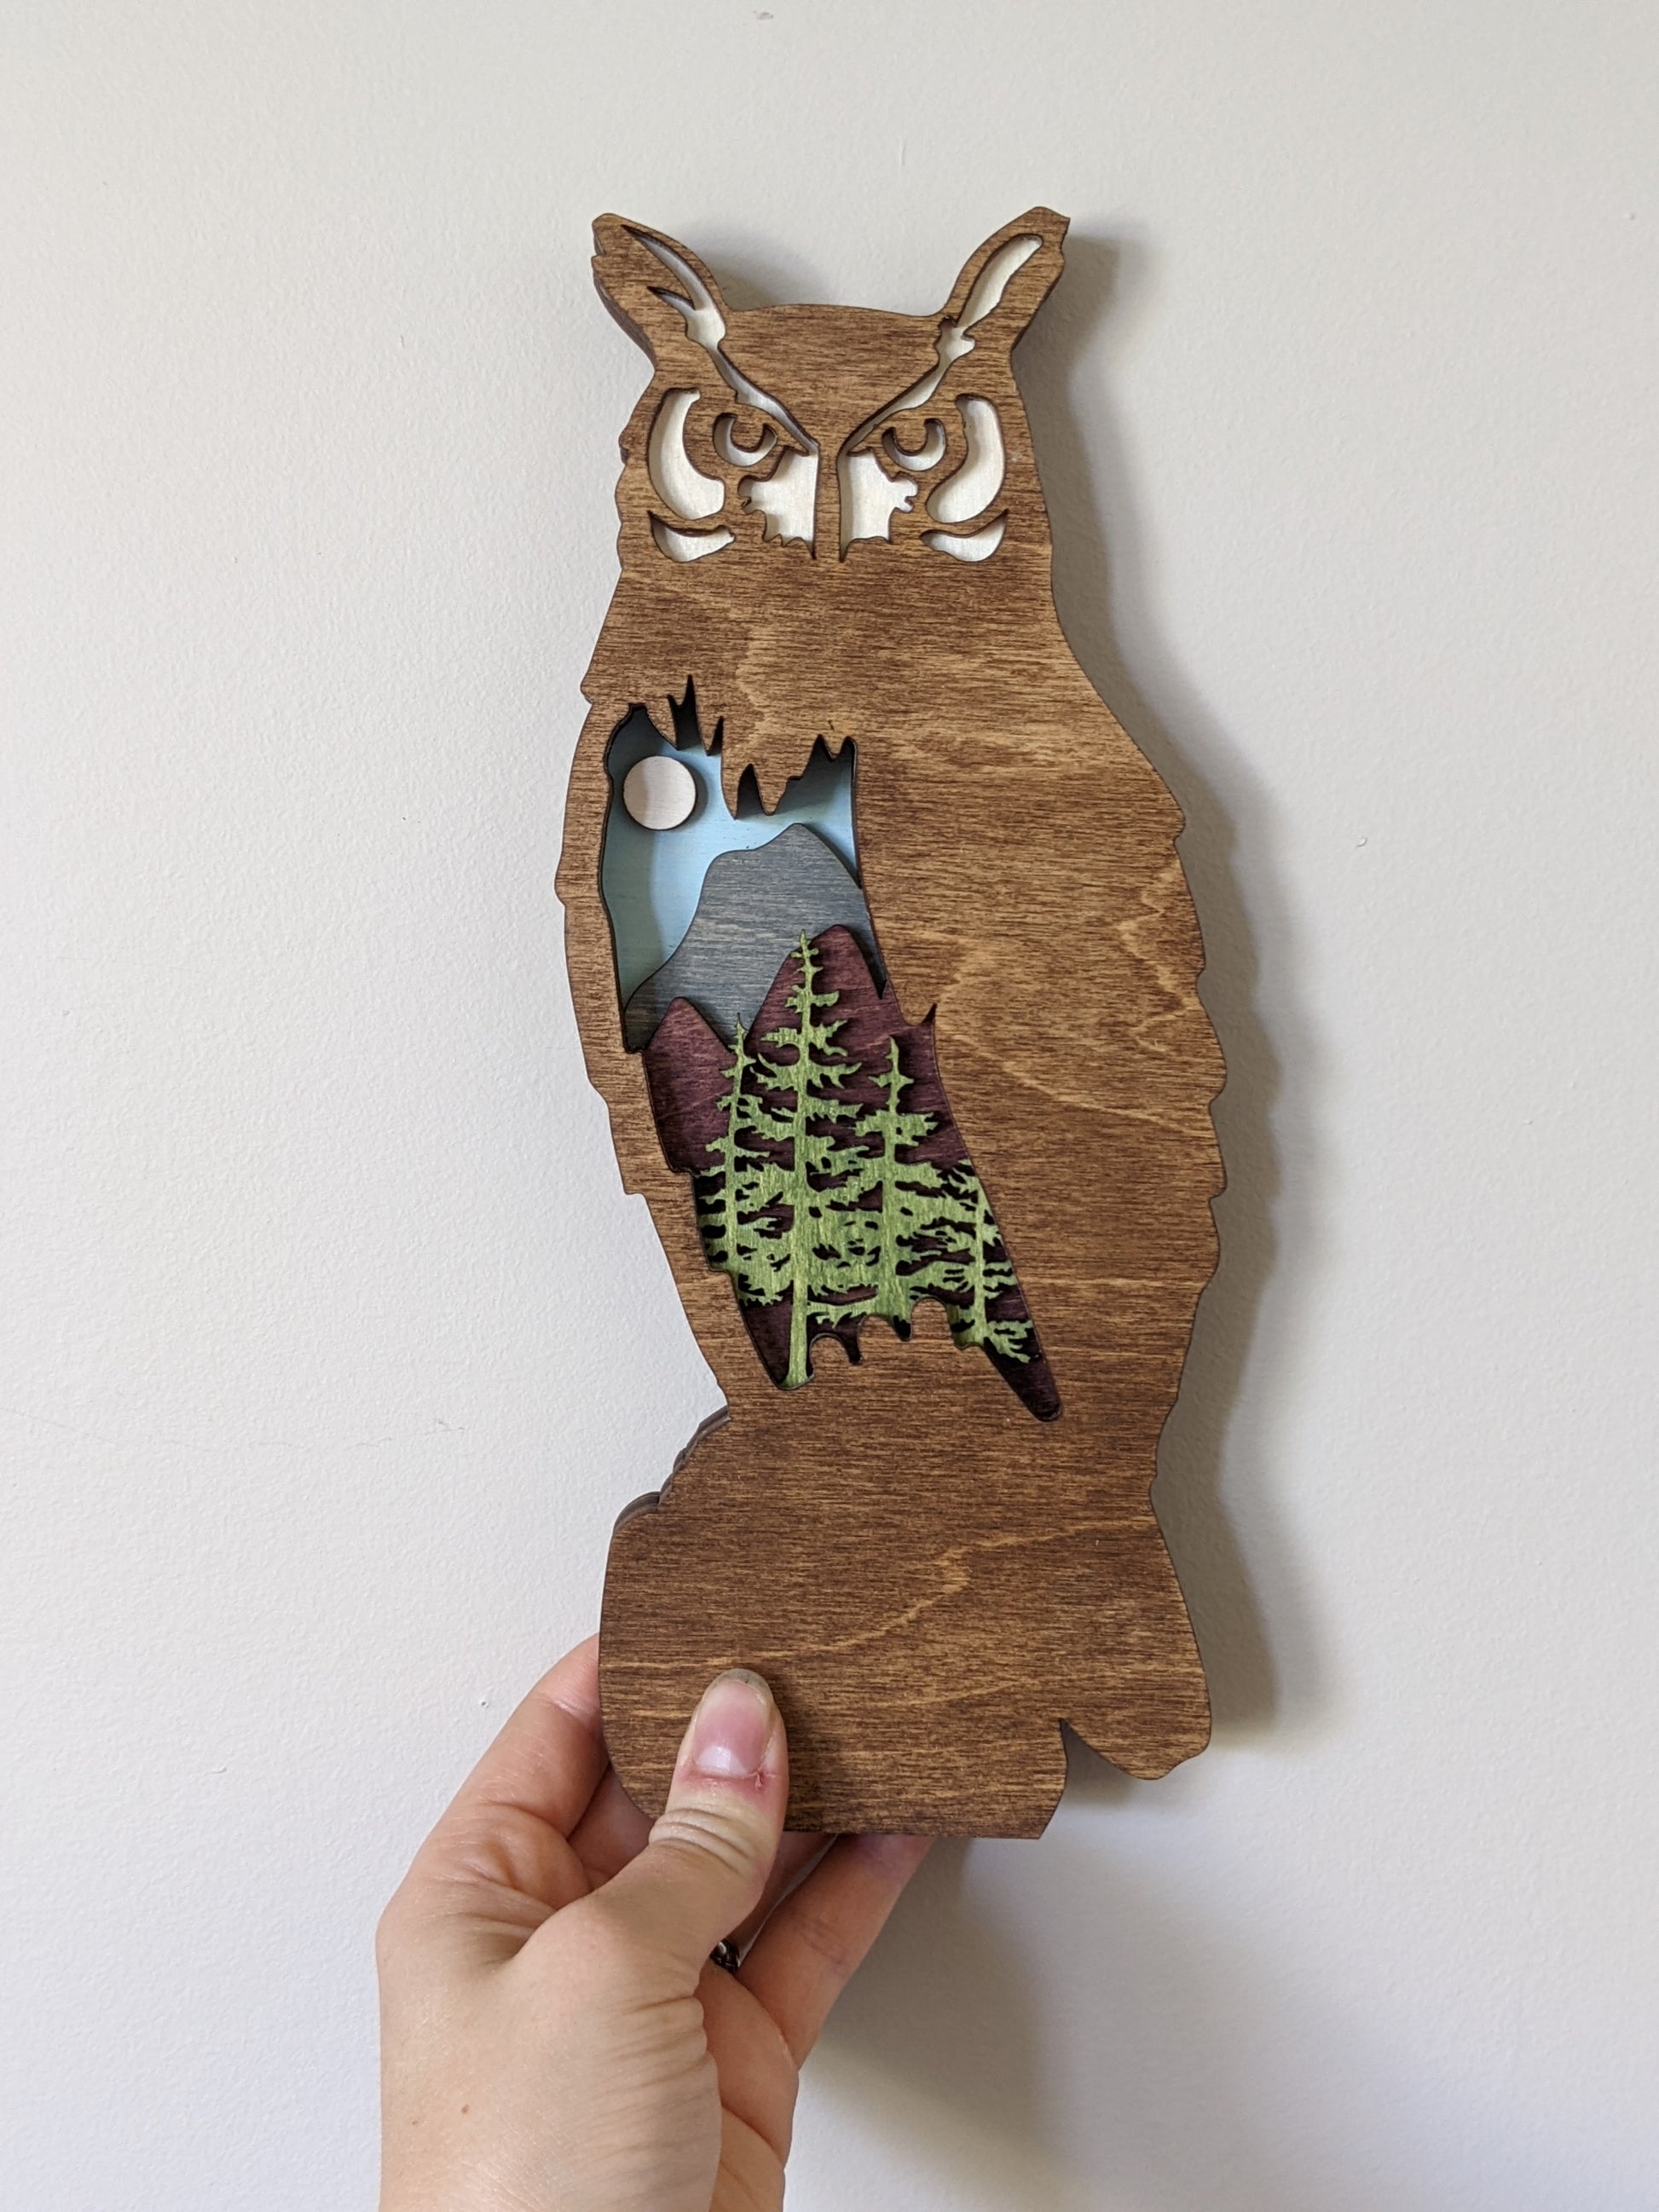 3D Layered Wooden Owl Art / Owl shaped layered mountain scene Artwork 50.00